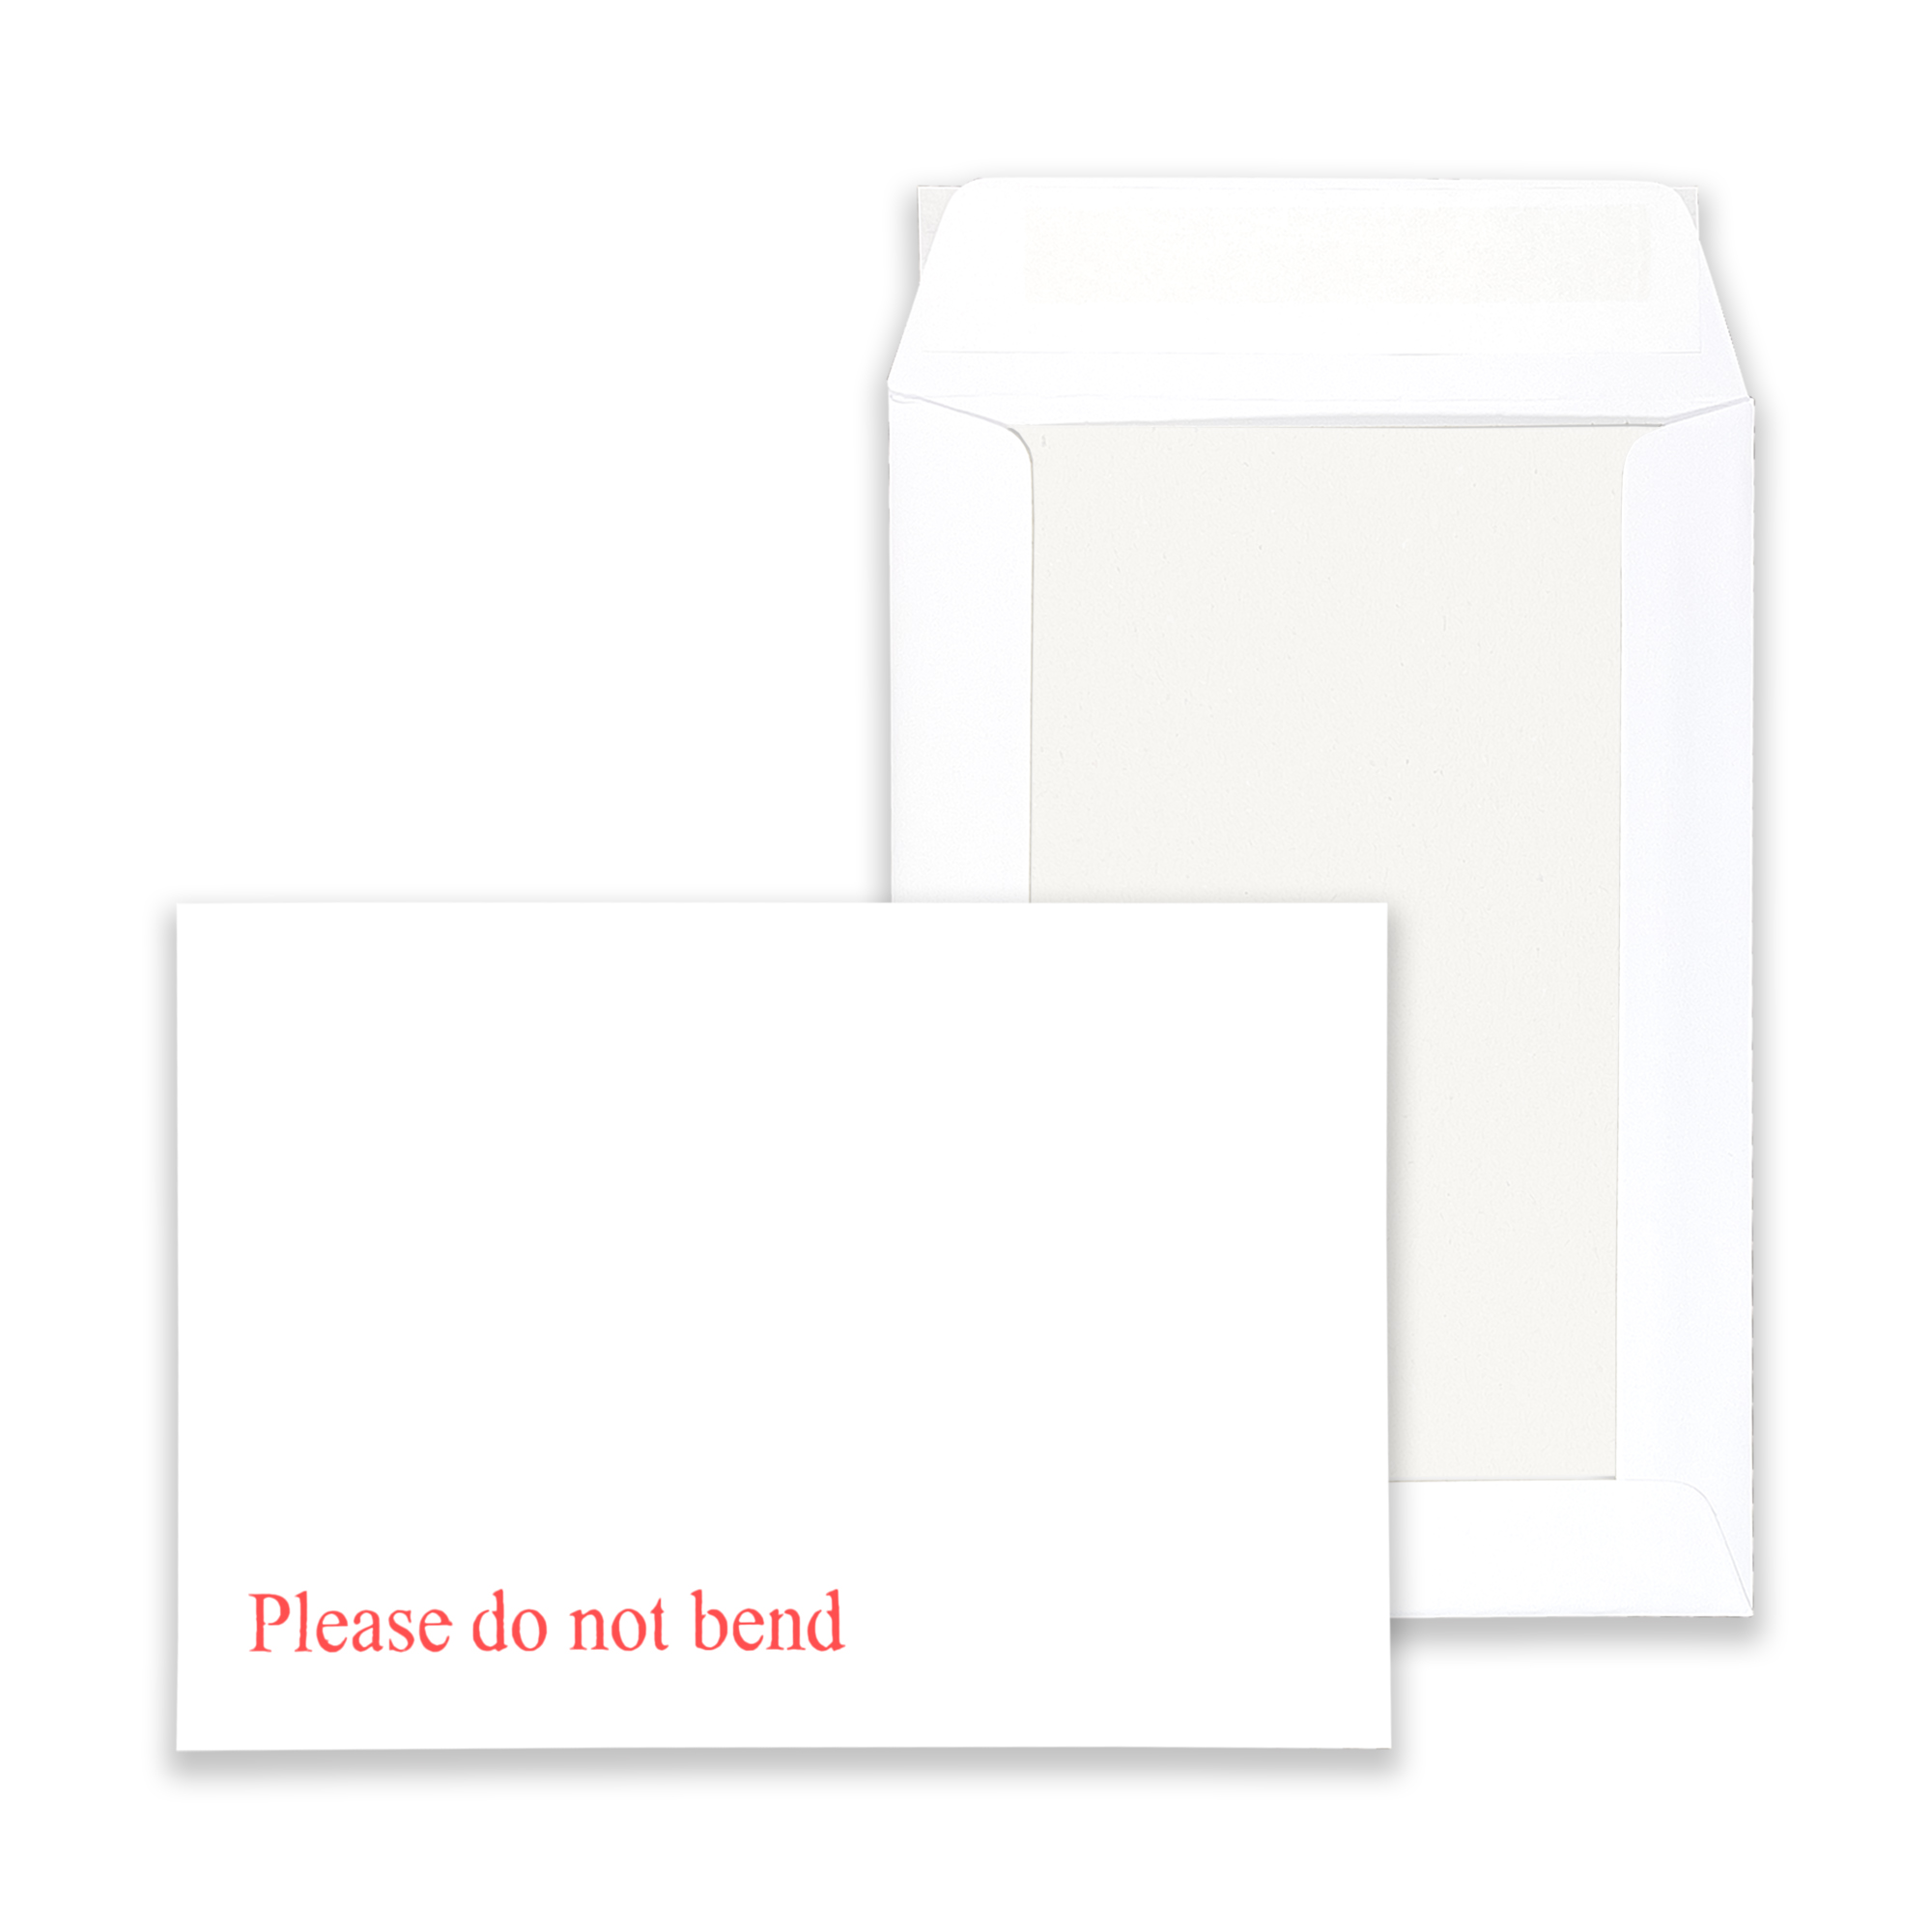 rectangle-white-board-back-please-do-not-bend-back-flap-closed-envelopes-together